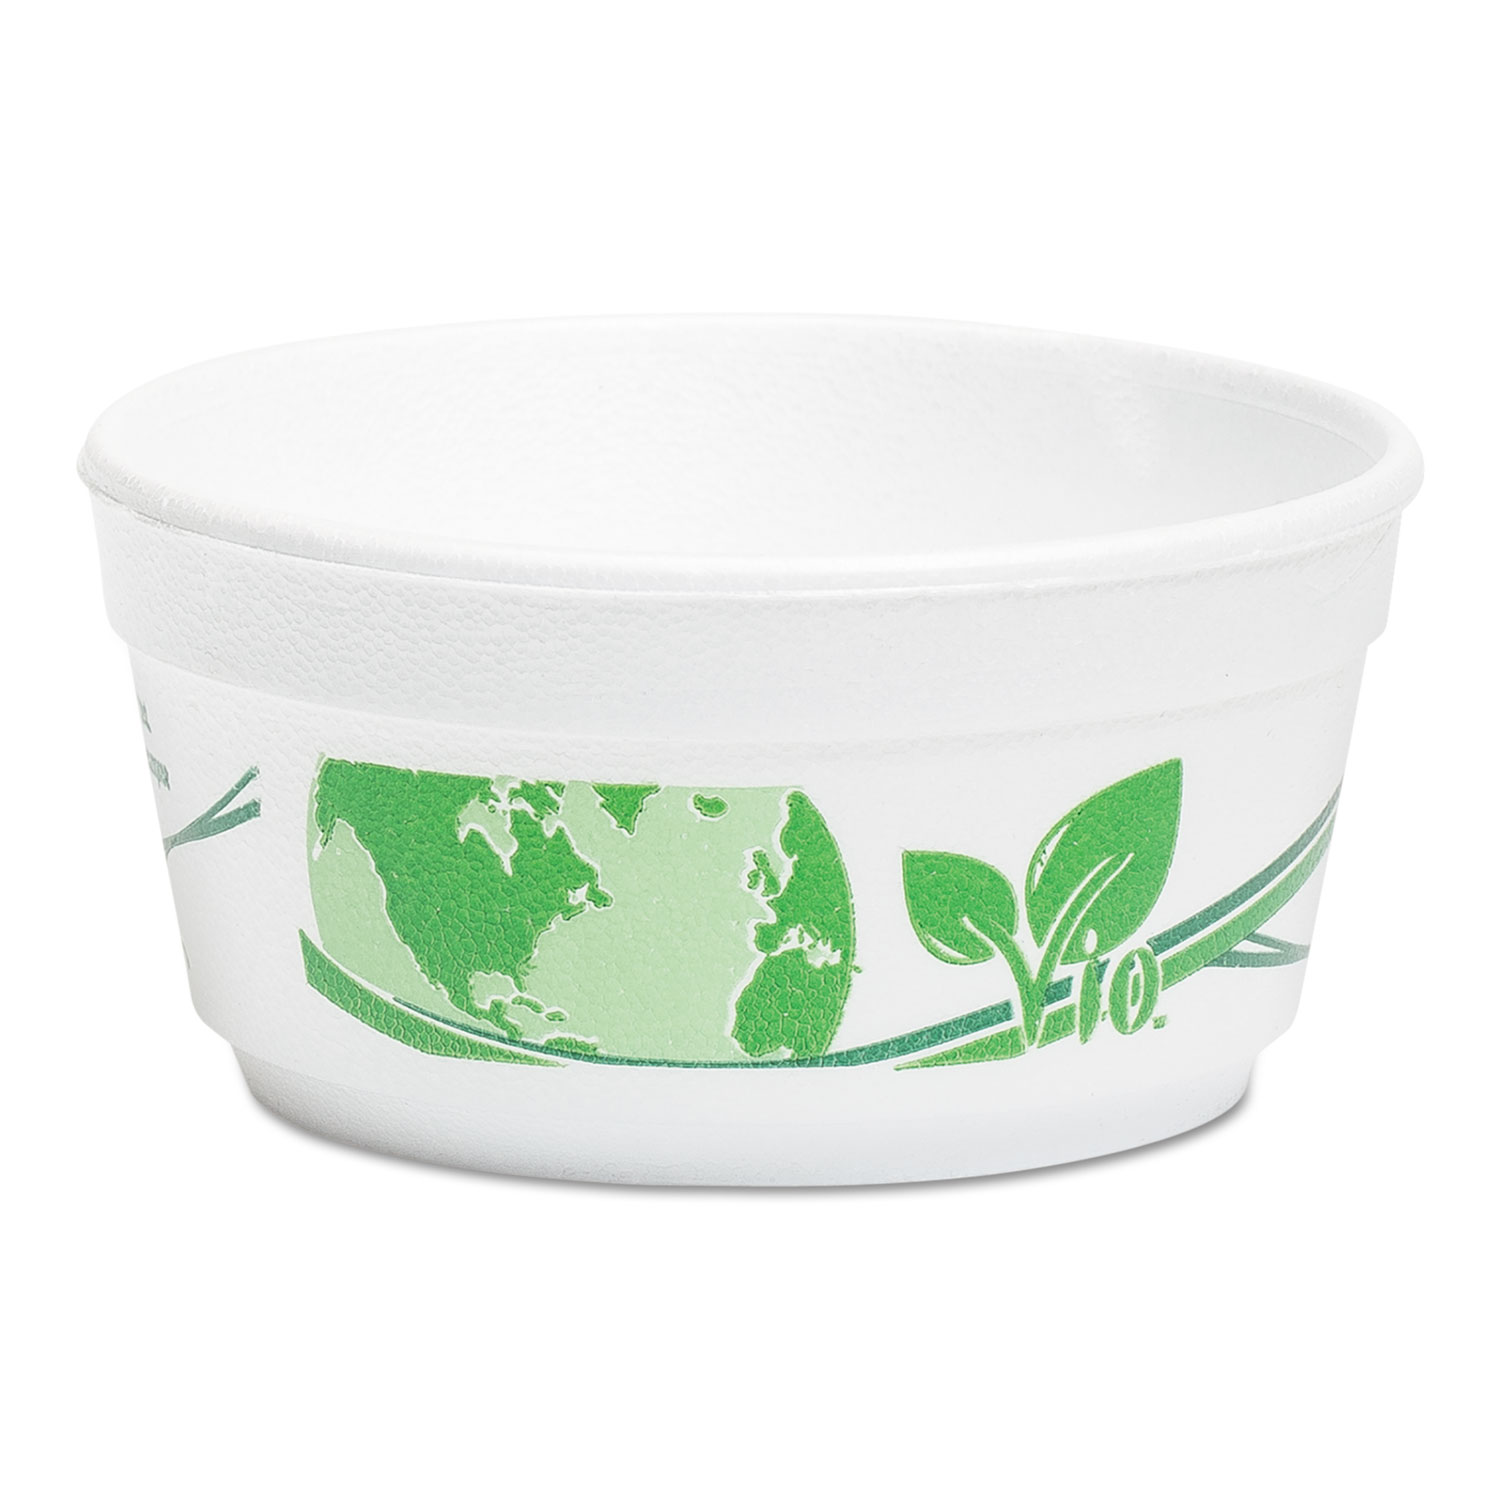 Vio Biodegradable Food Containers, 8 oz Bowl, Foam, White/Green, 500/Carton